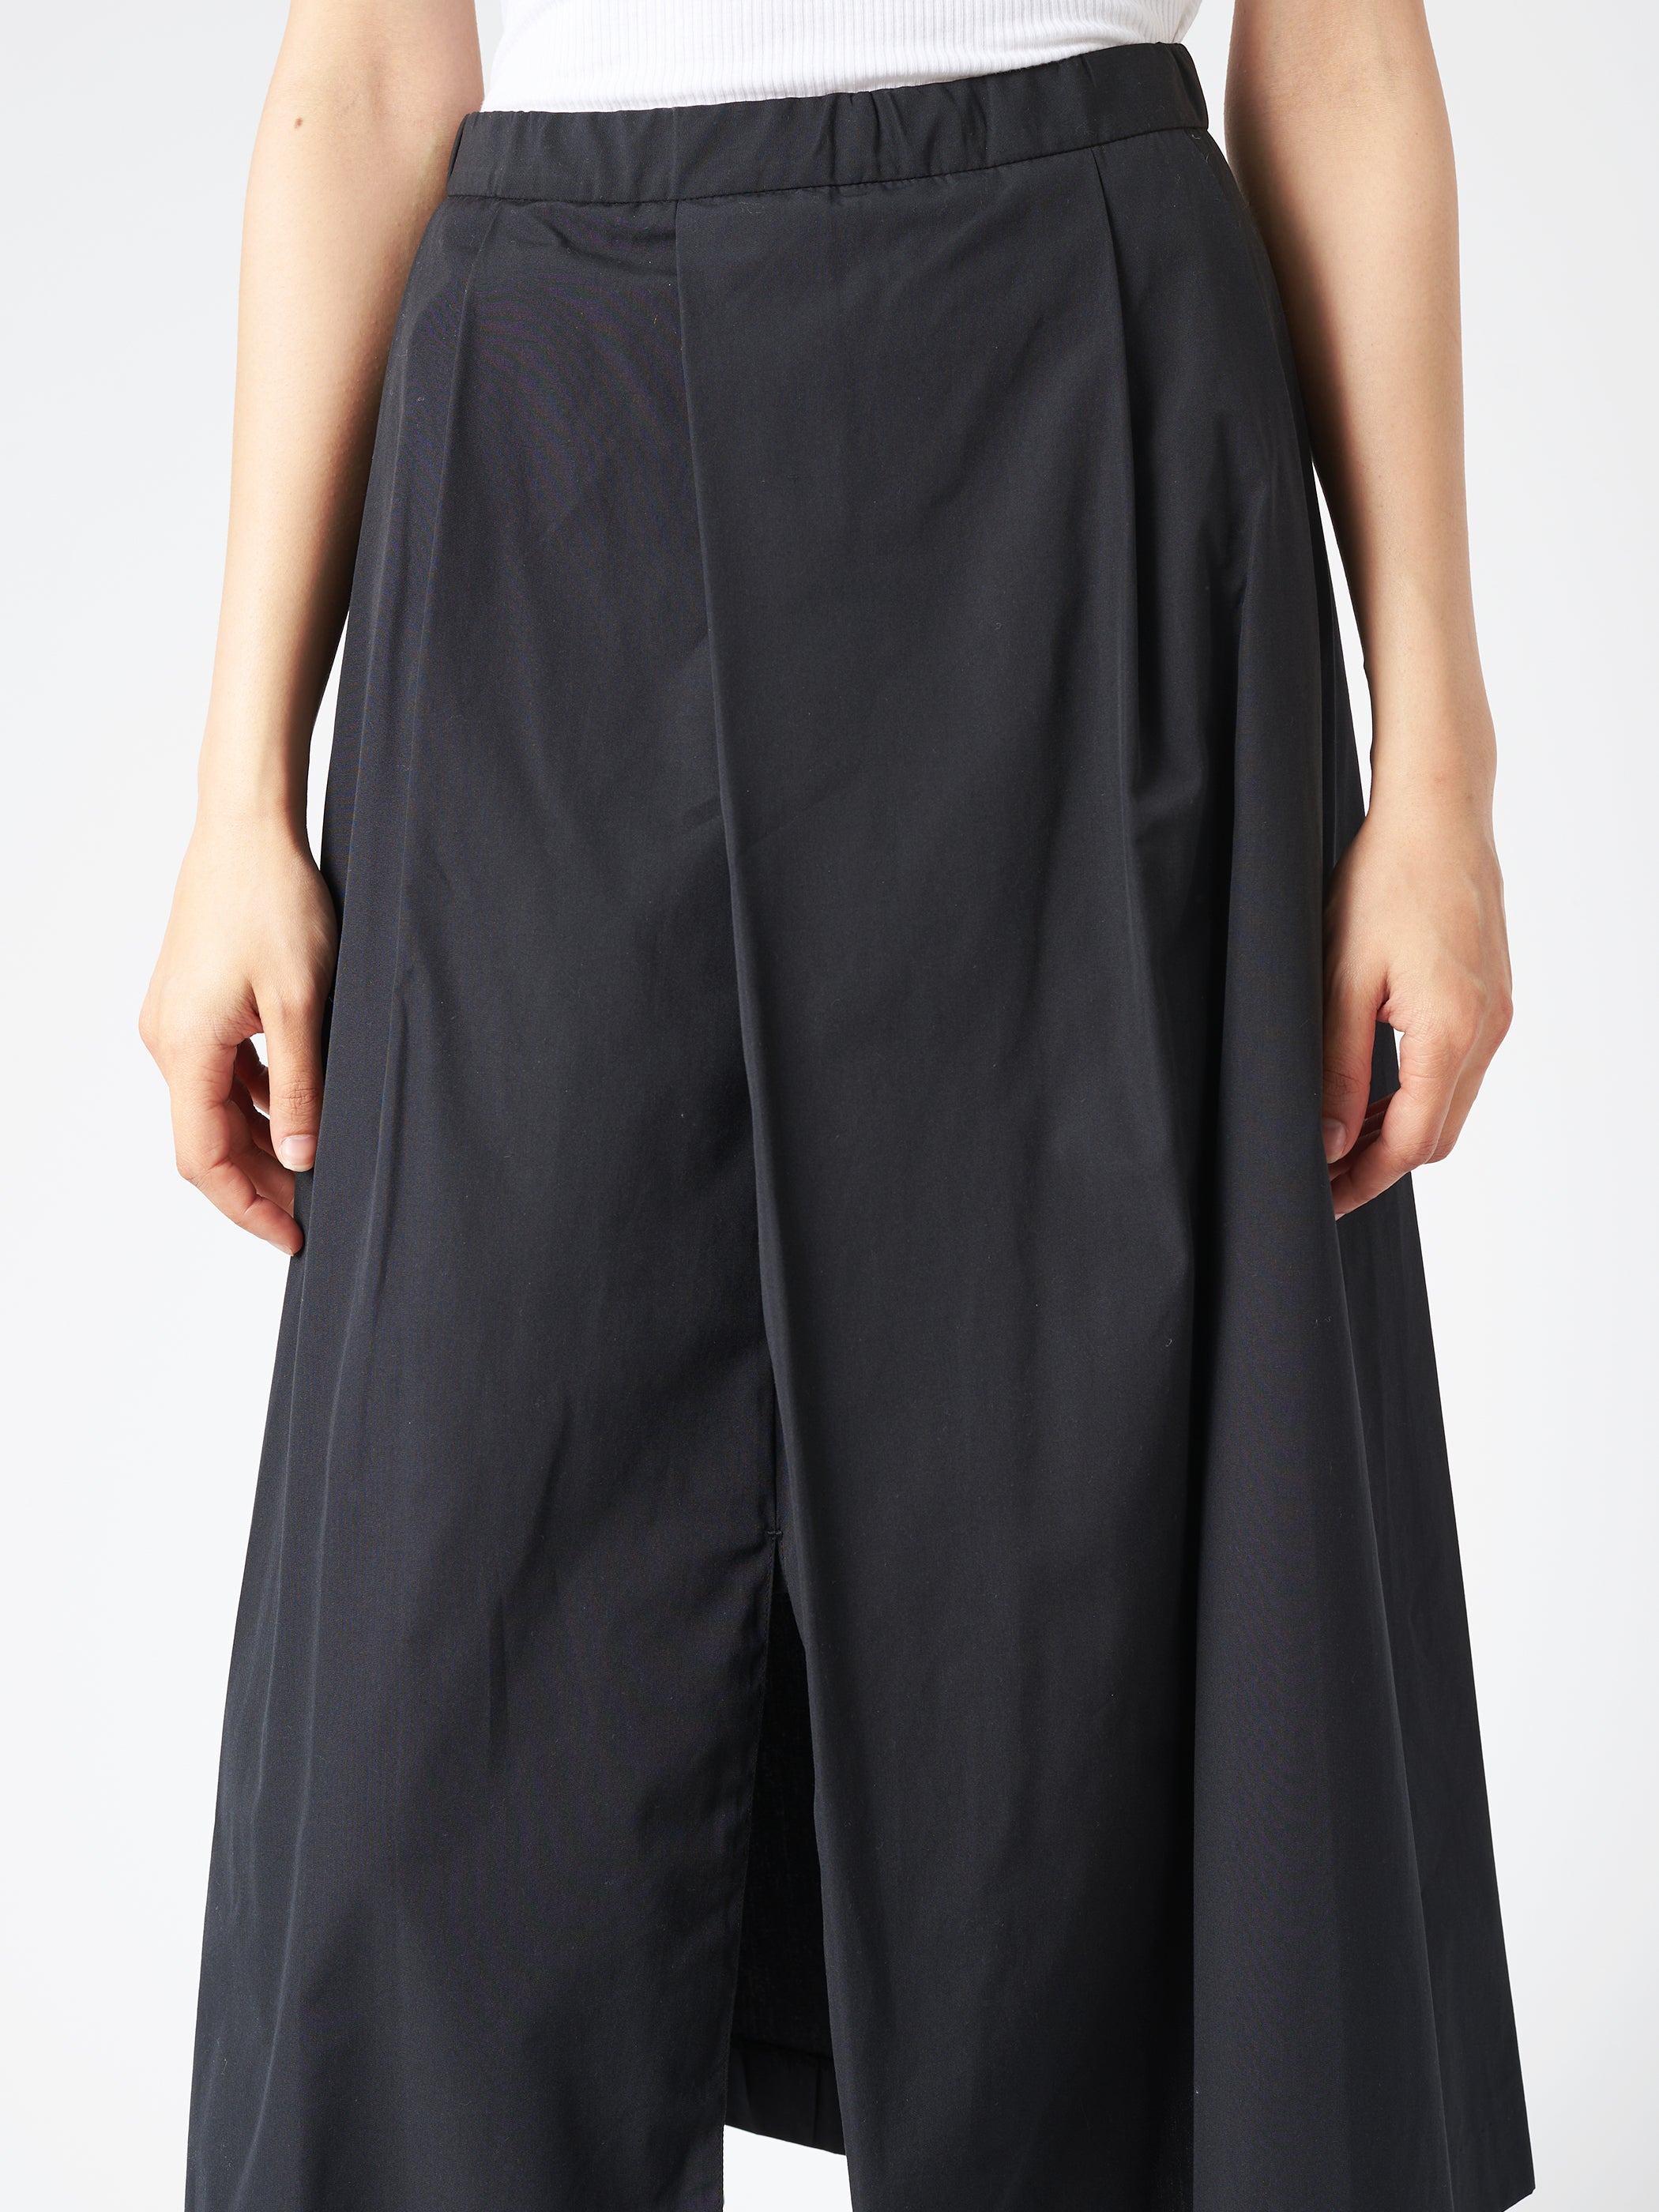 Decagon Skirt